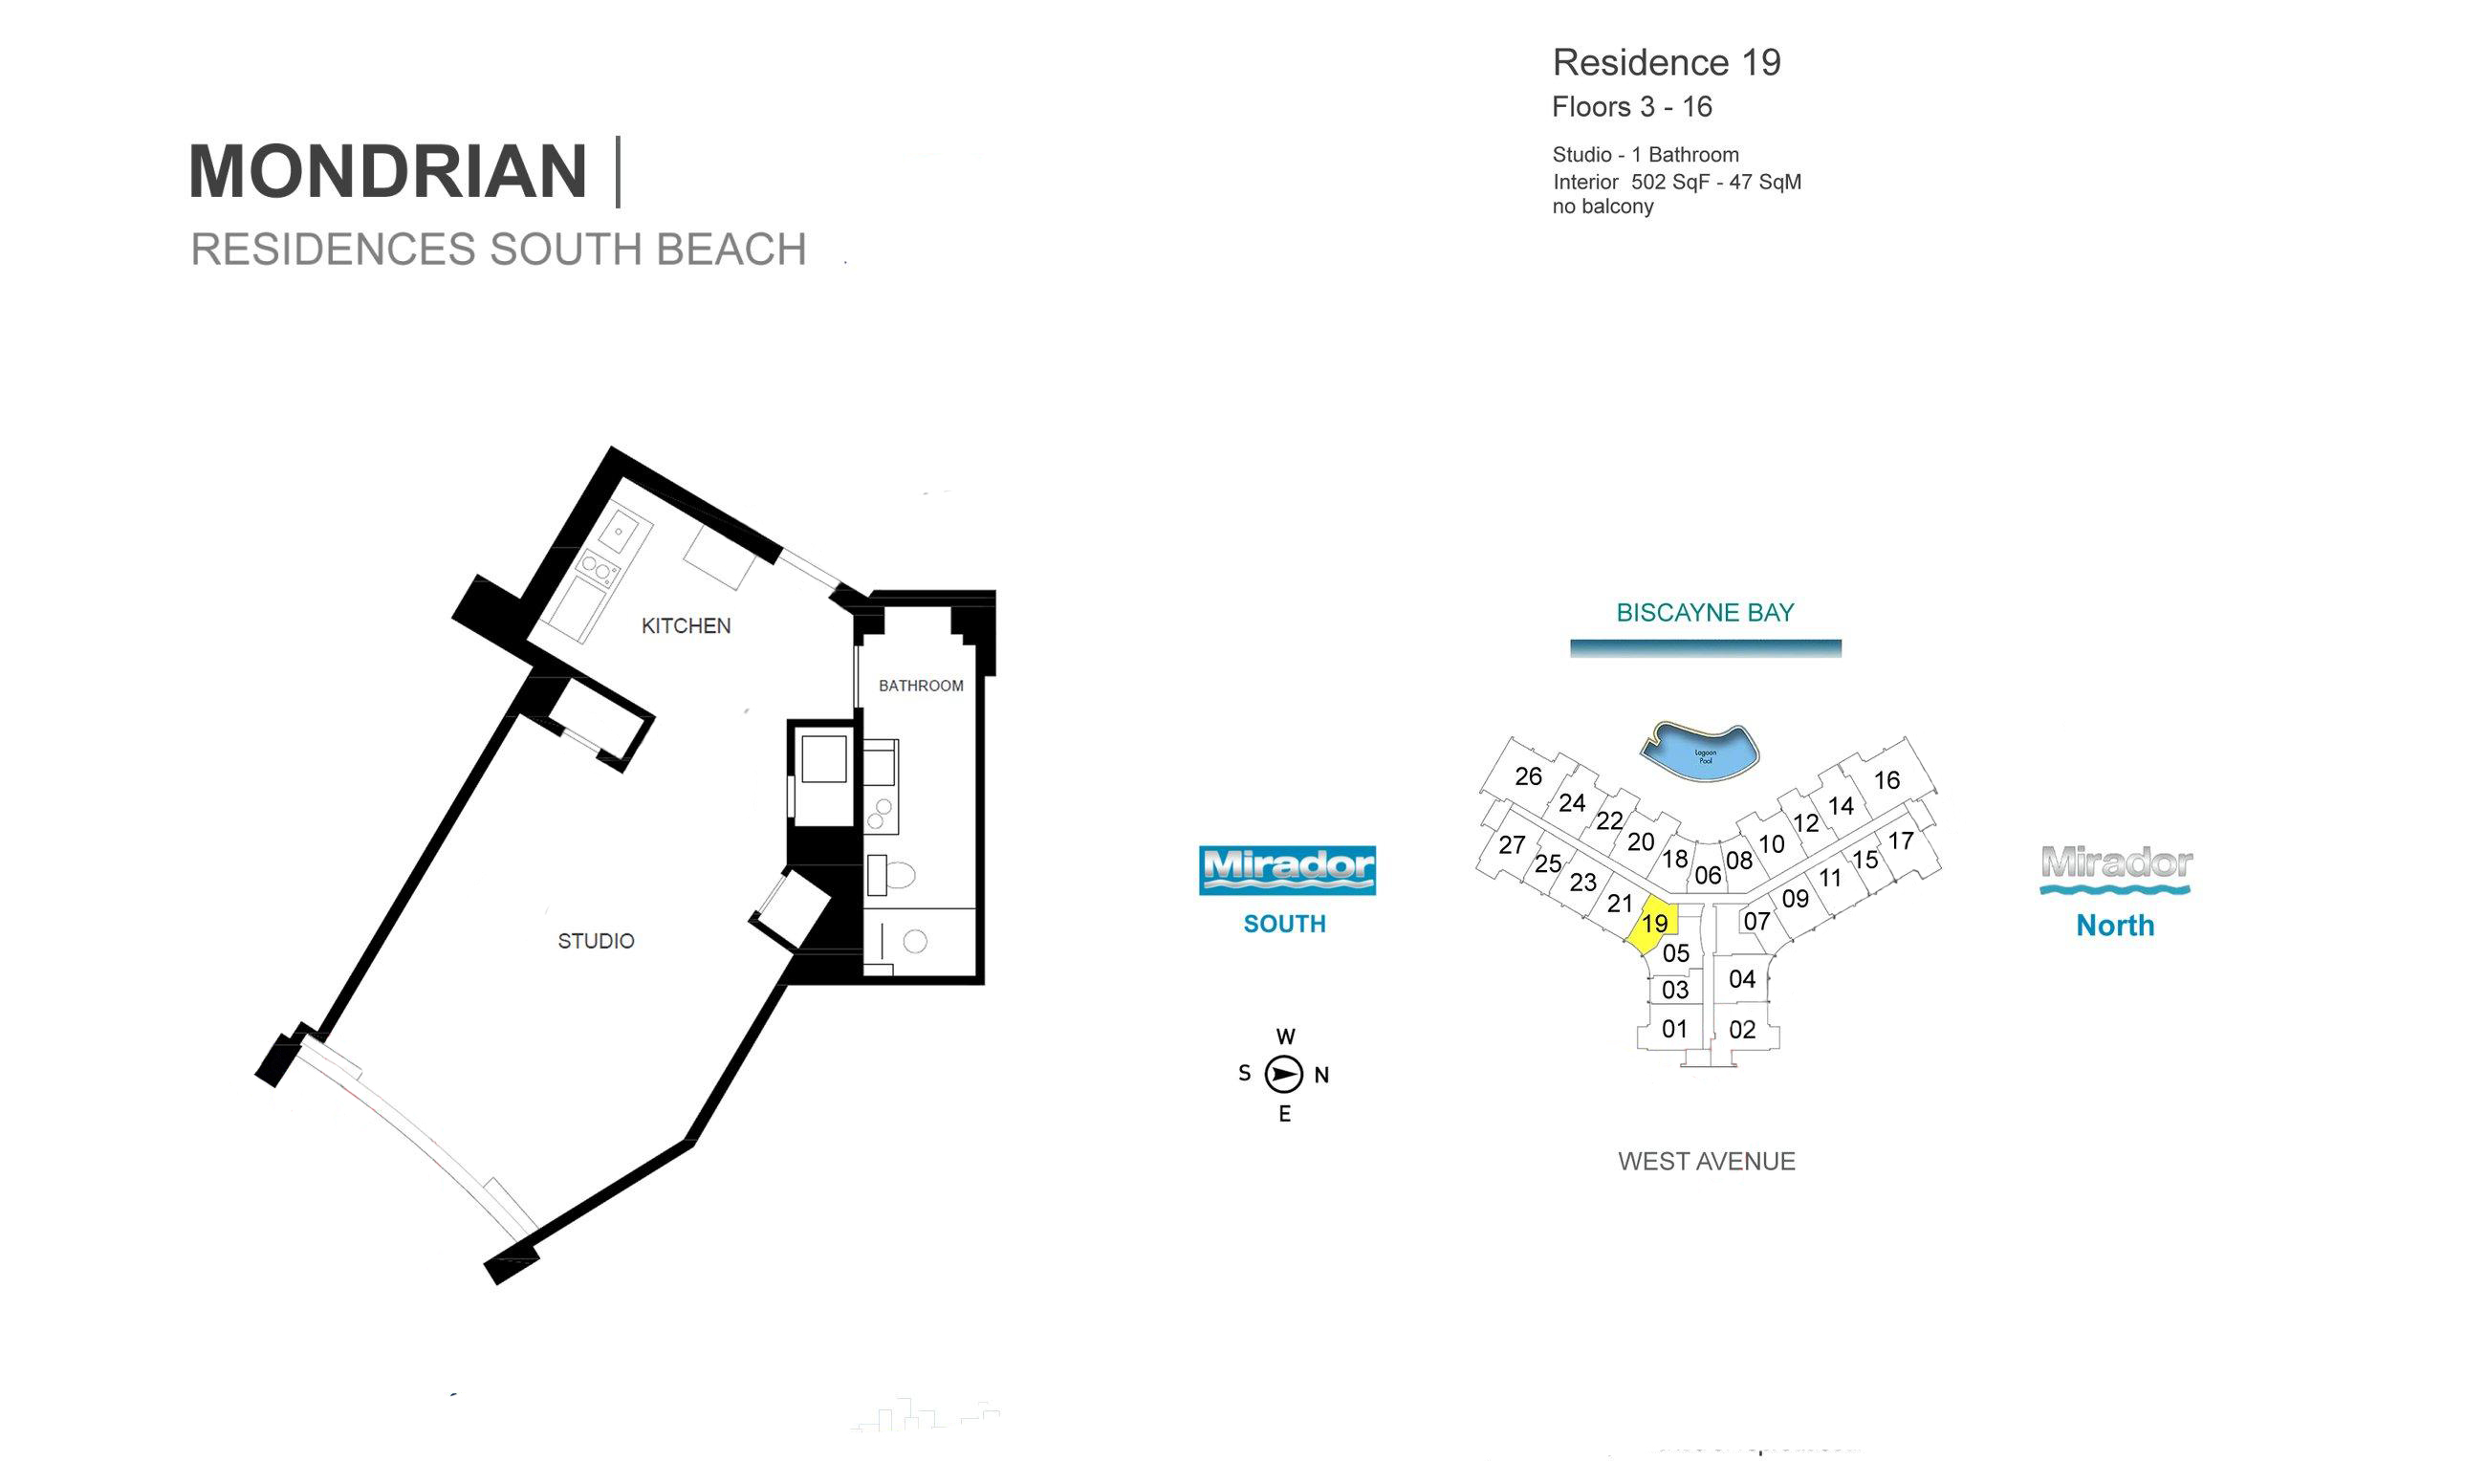 Mondrian South Beach Residence 19